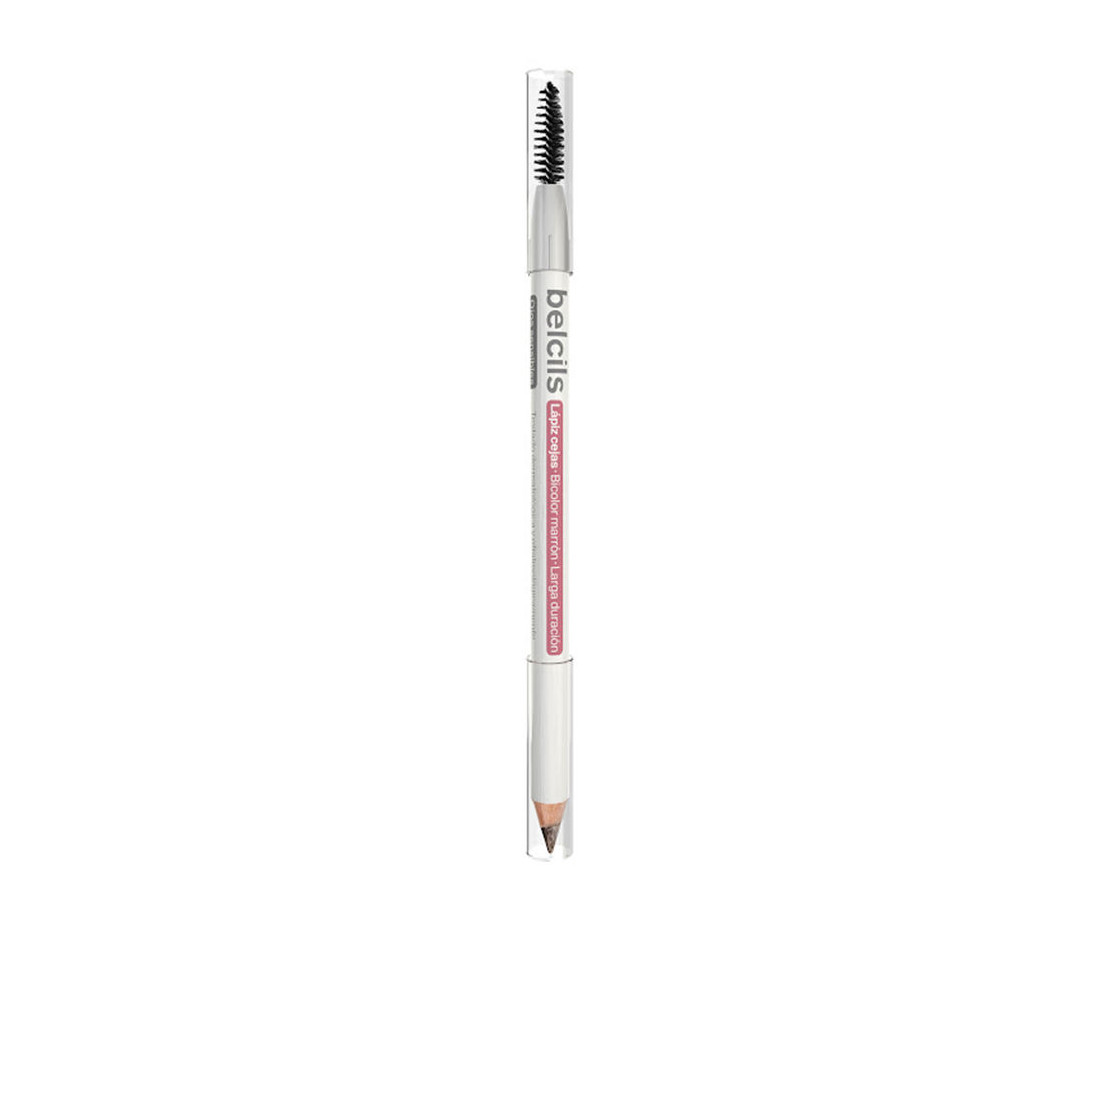 BELCILS SENSITIVE EYES matita per sopracciglia bicolor 1.06 gr